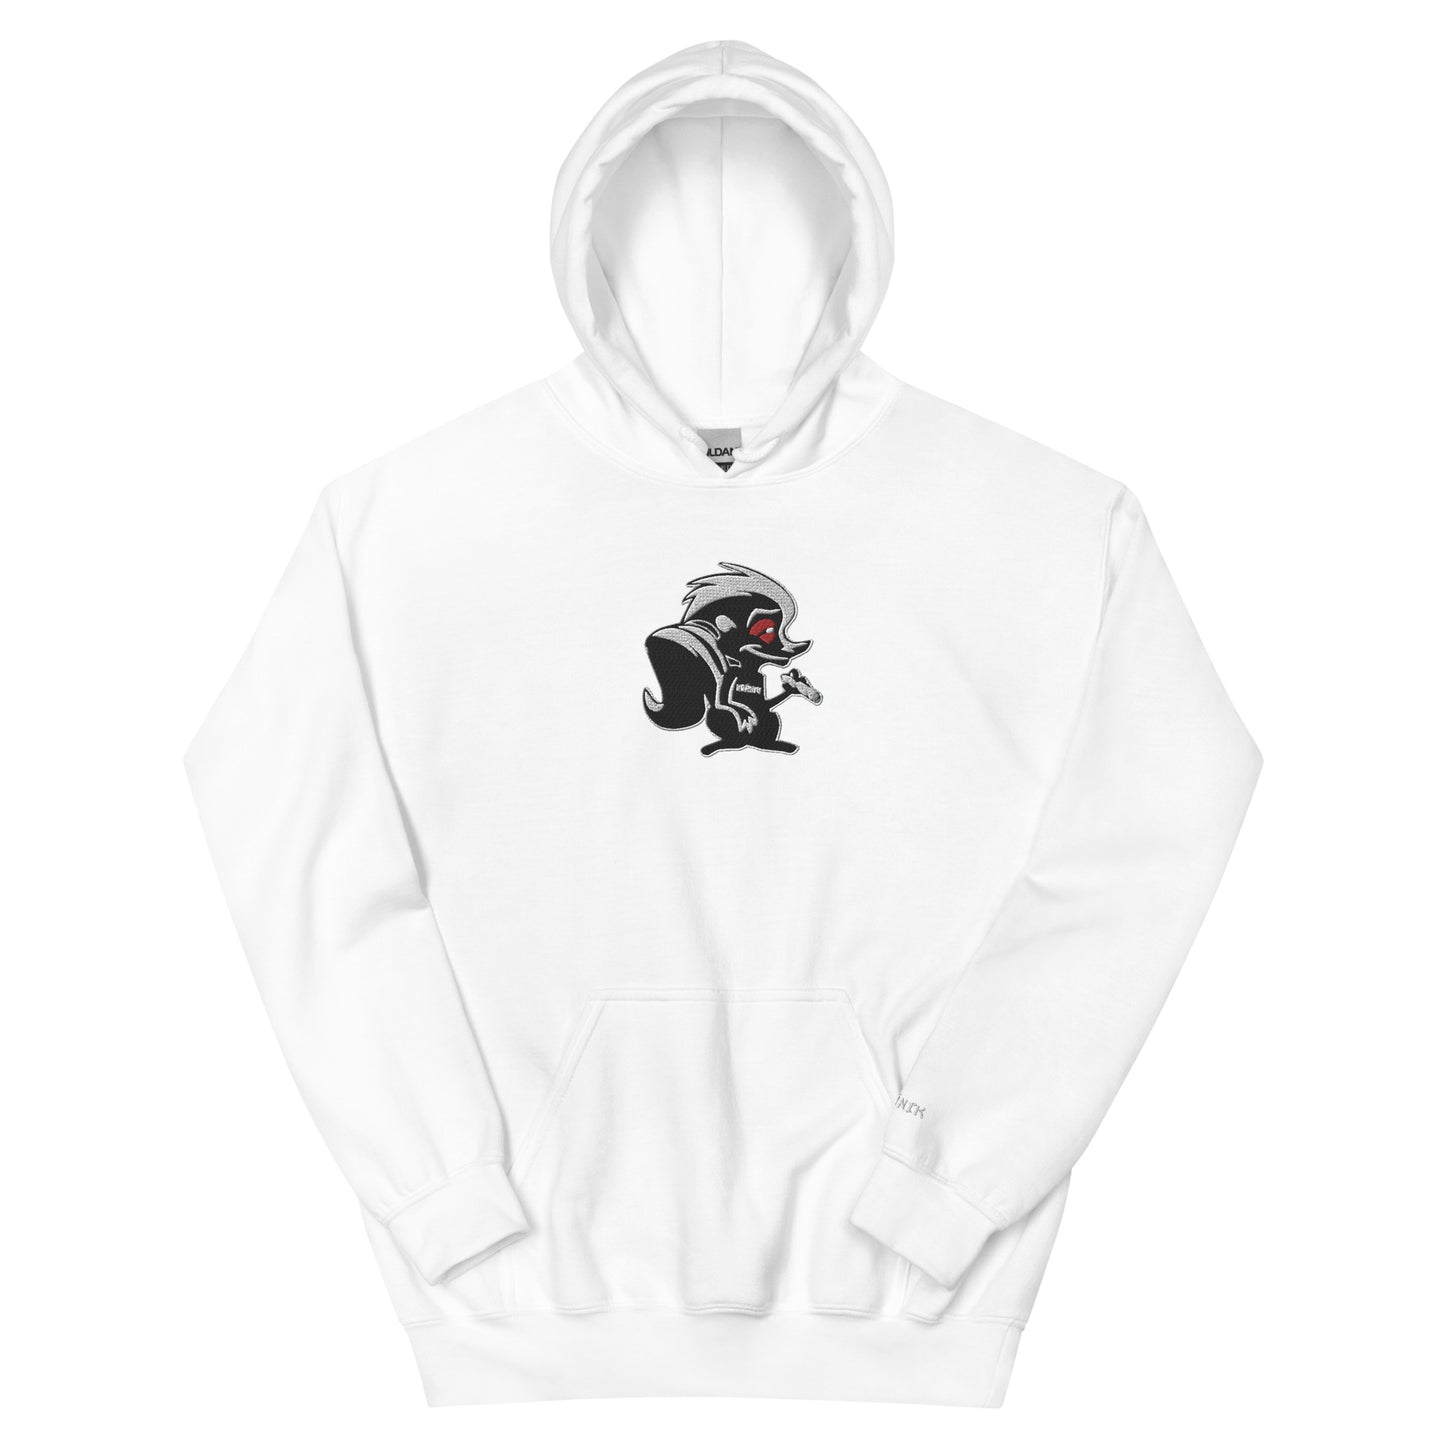 (1) Kranik Brand Hoodie -420 Collection - Embroidered - Unkle Skunk Logo